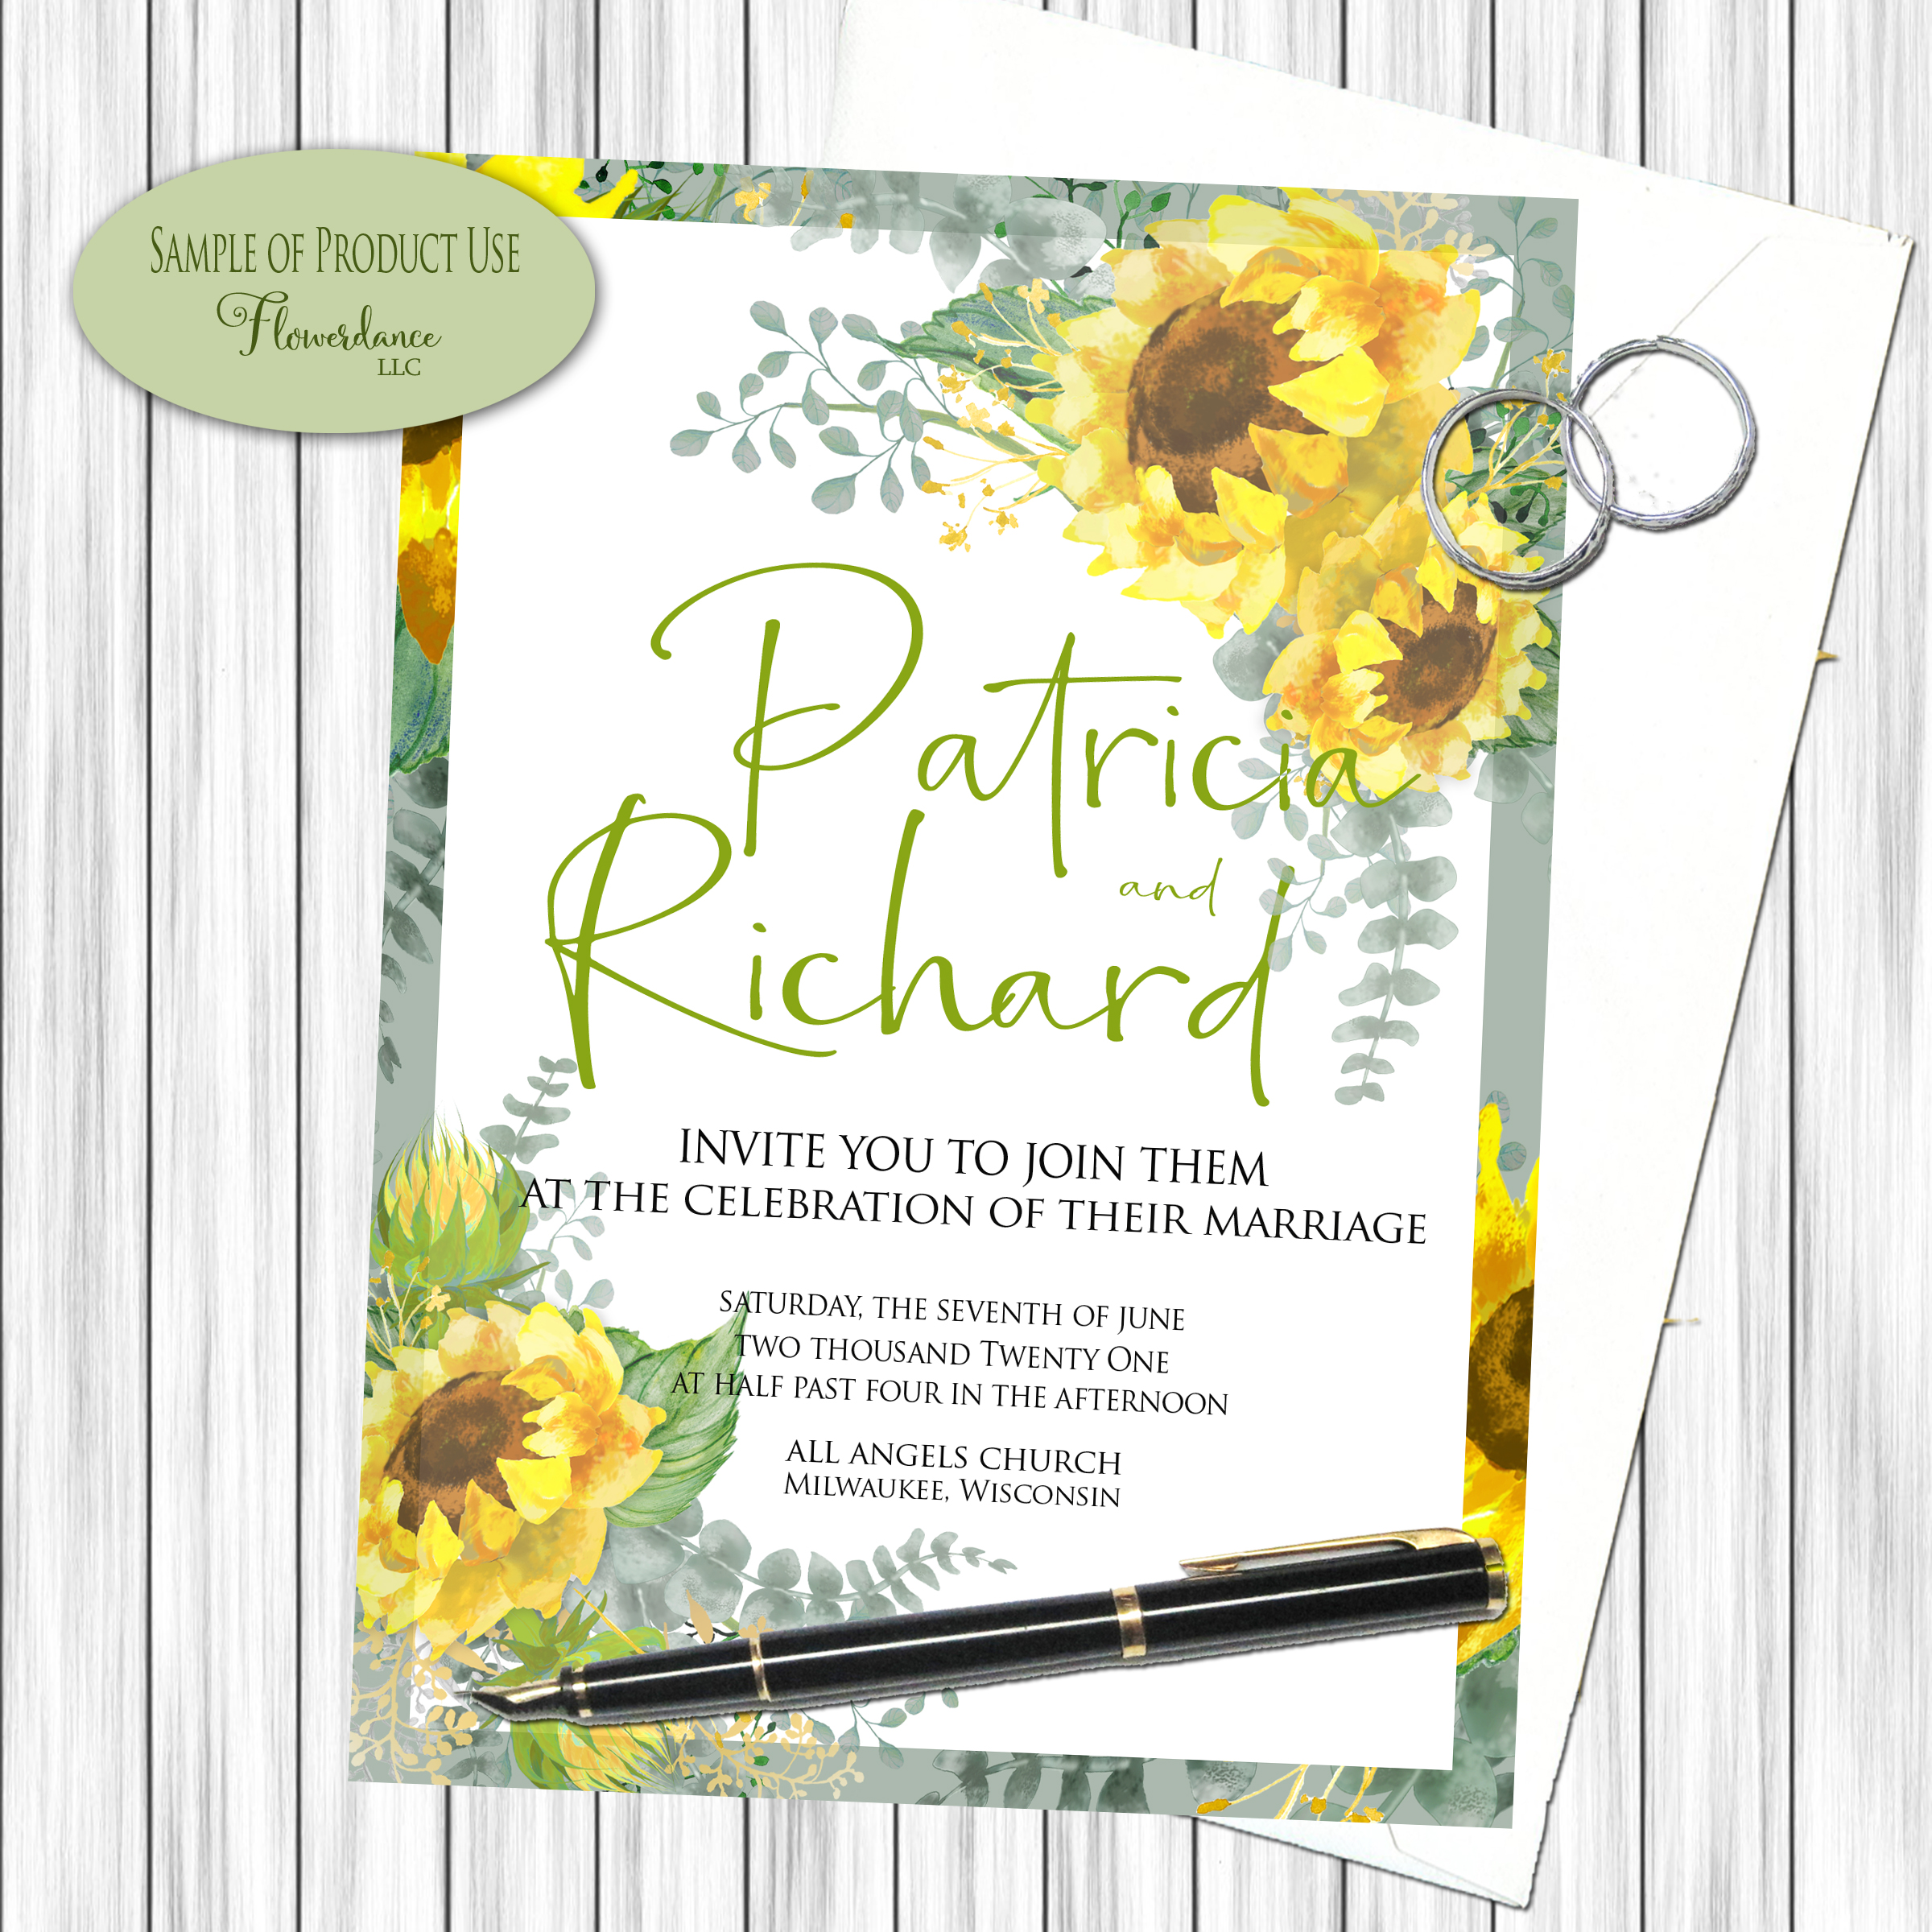 Download Sunflower Watercolor Clipart Elements - Eucalyptus ...